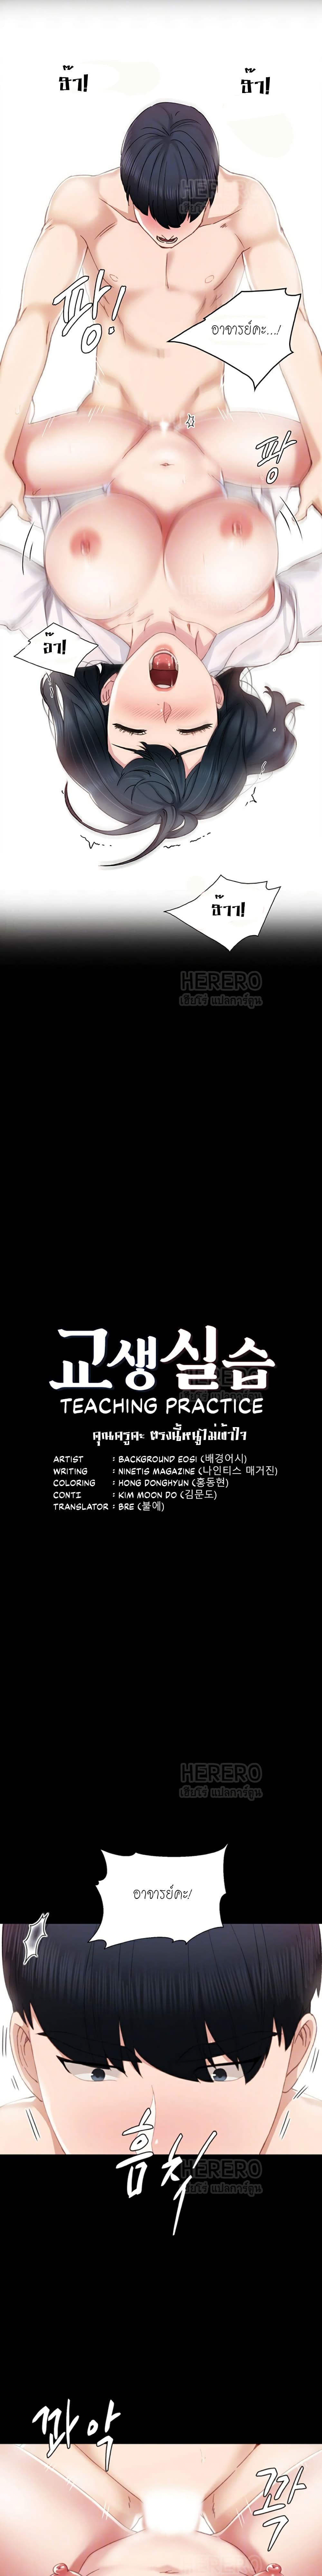 Teaching Practice 11 (3)